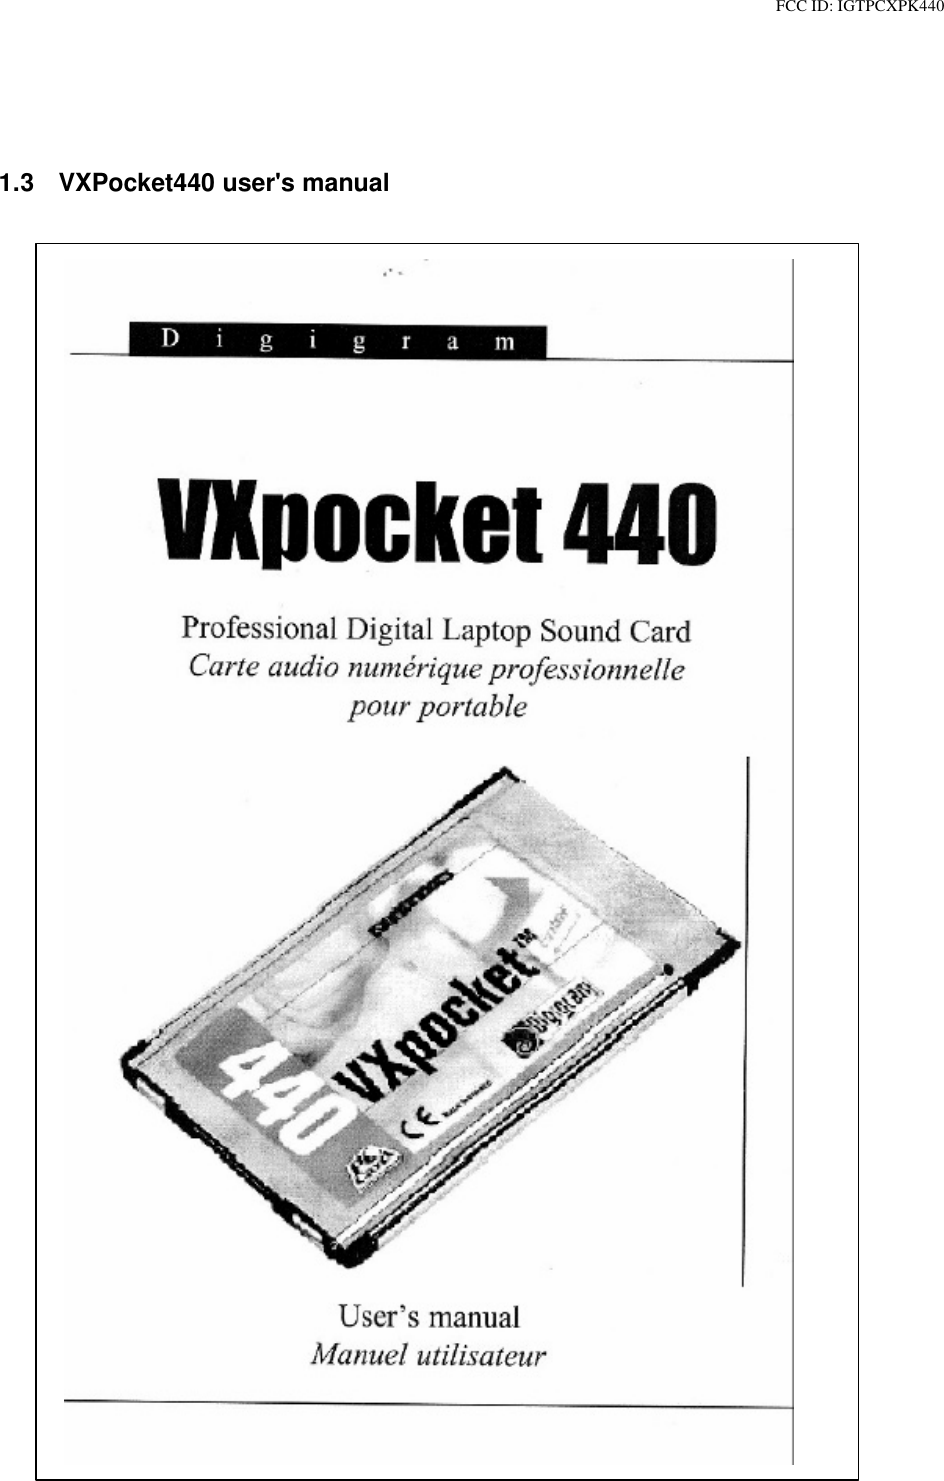 FCC ID: IGTPCXPK4401.3 VXPocket440 user&apos;s manual